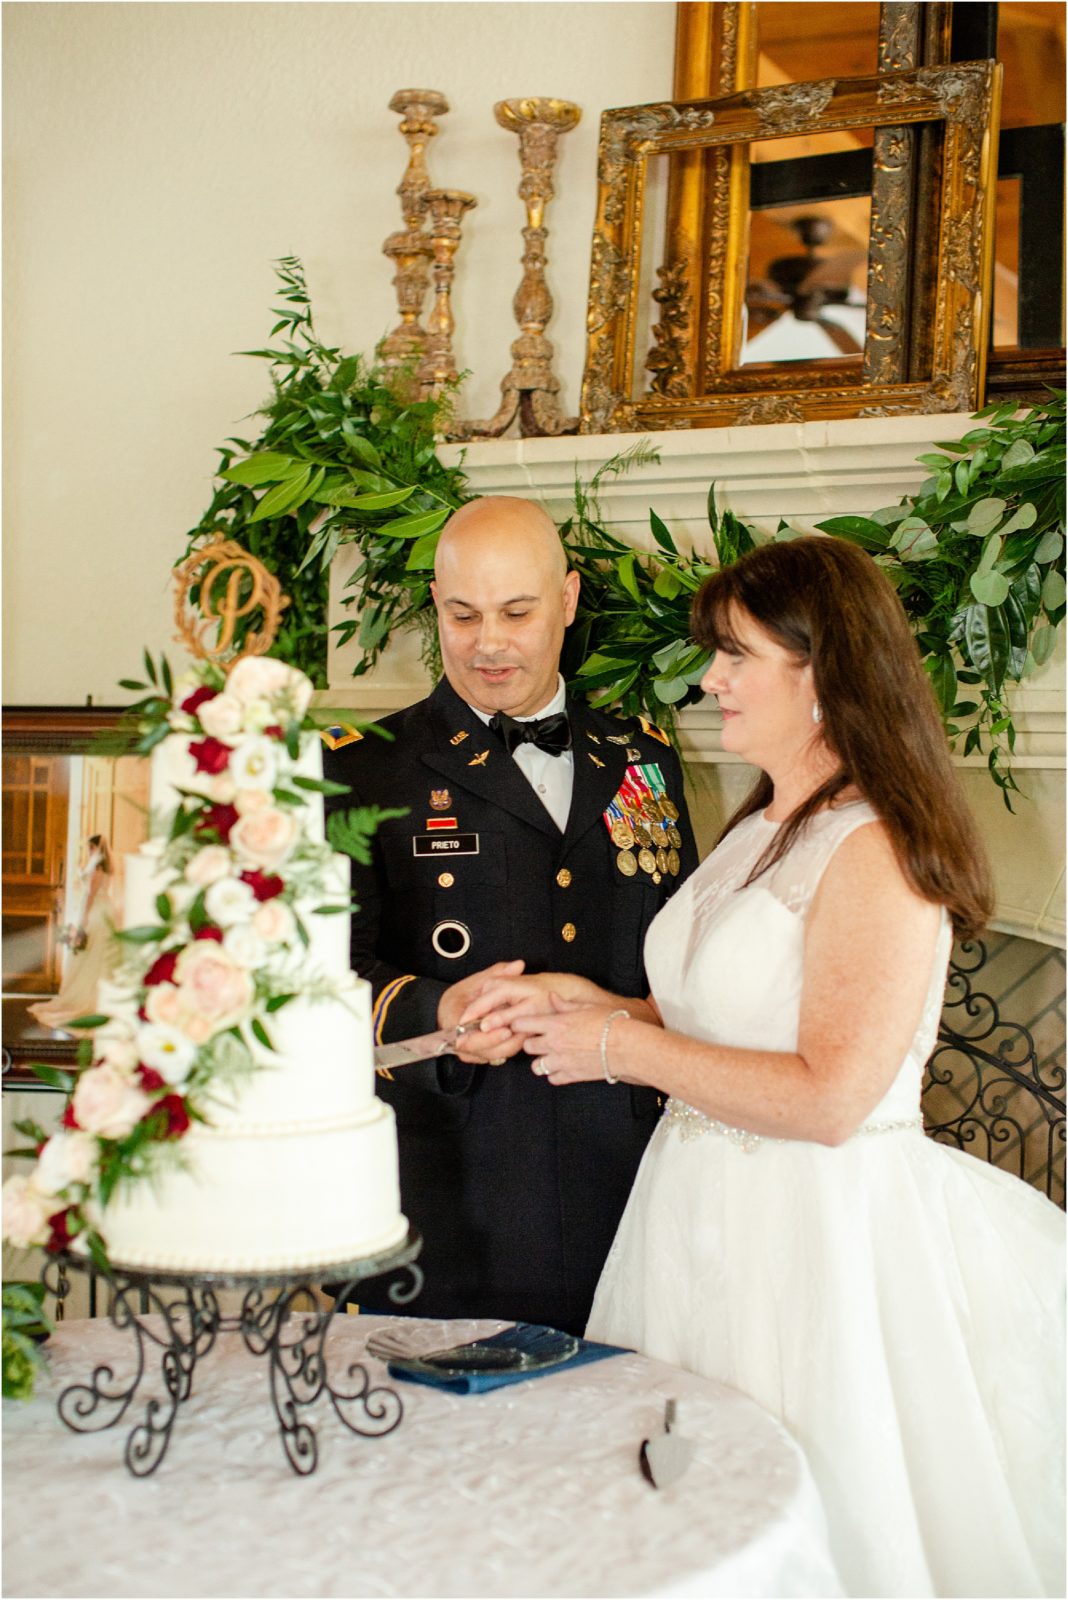 Military couple cutting wedding cake